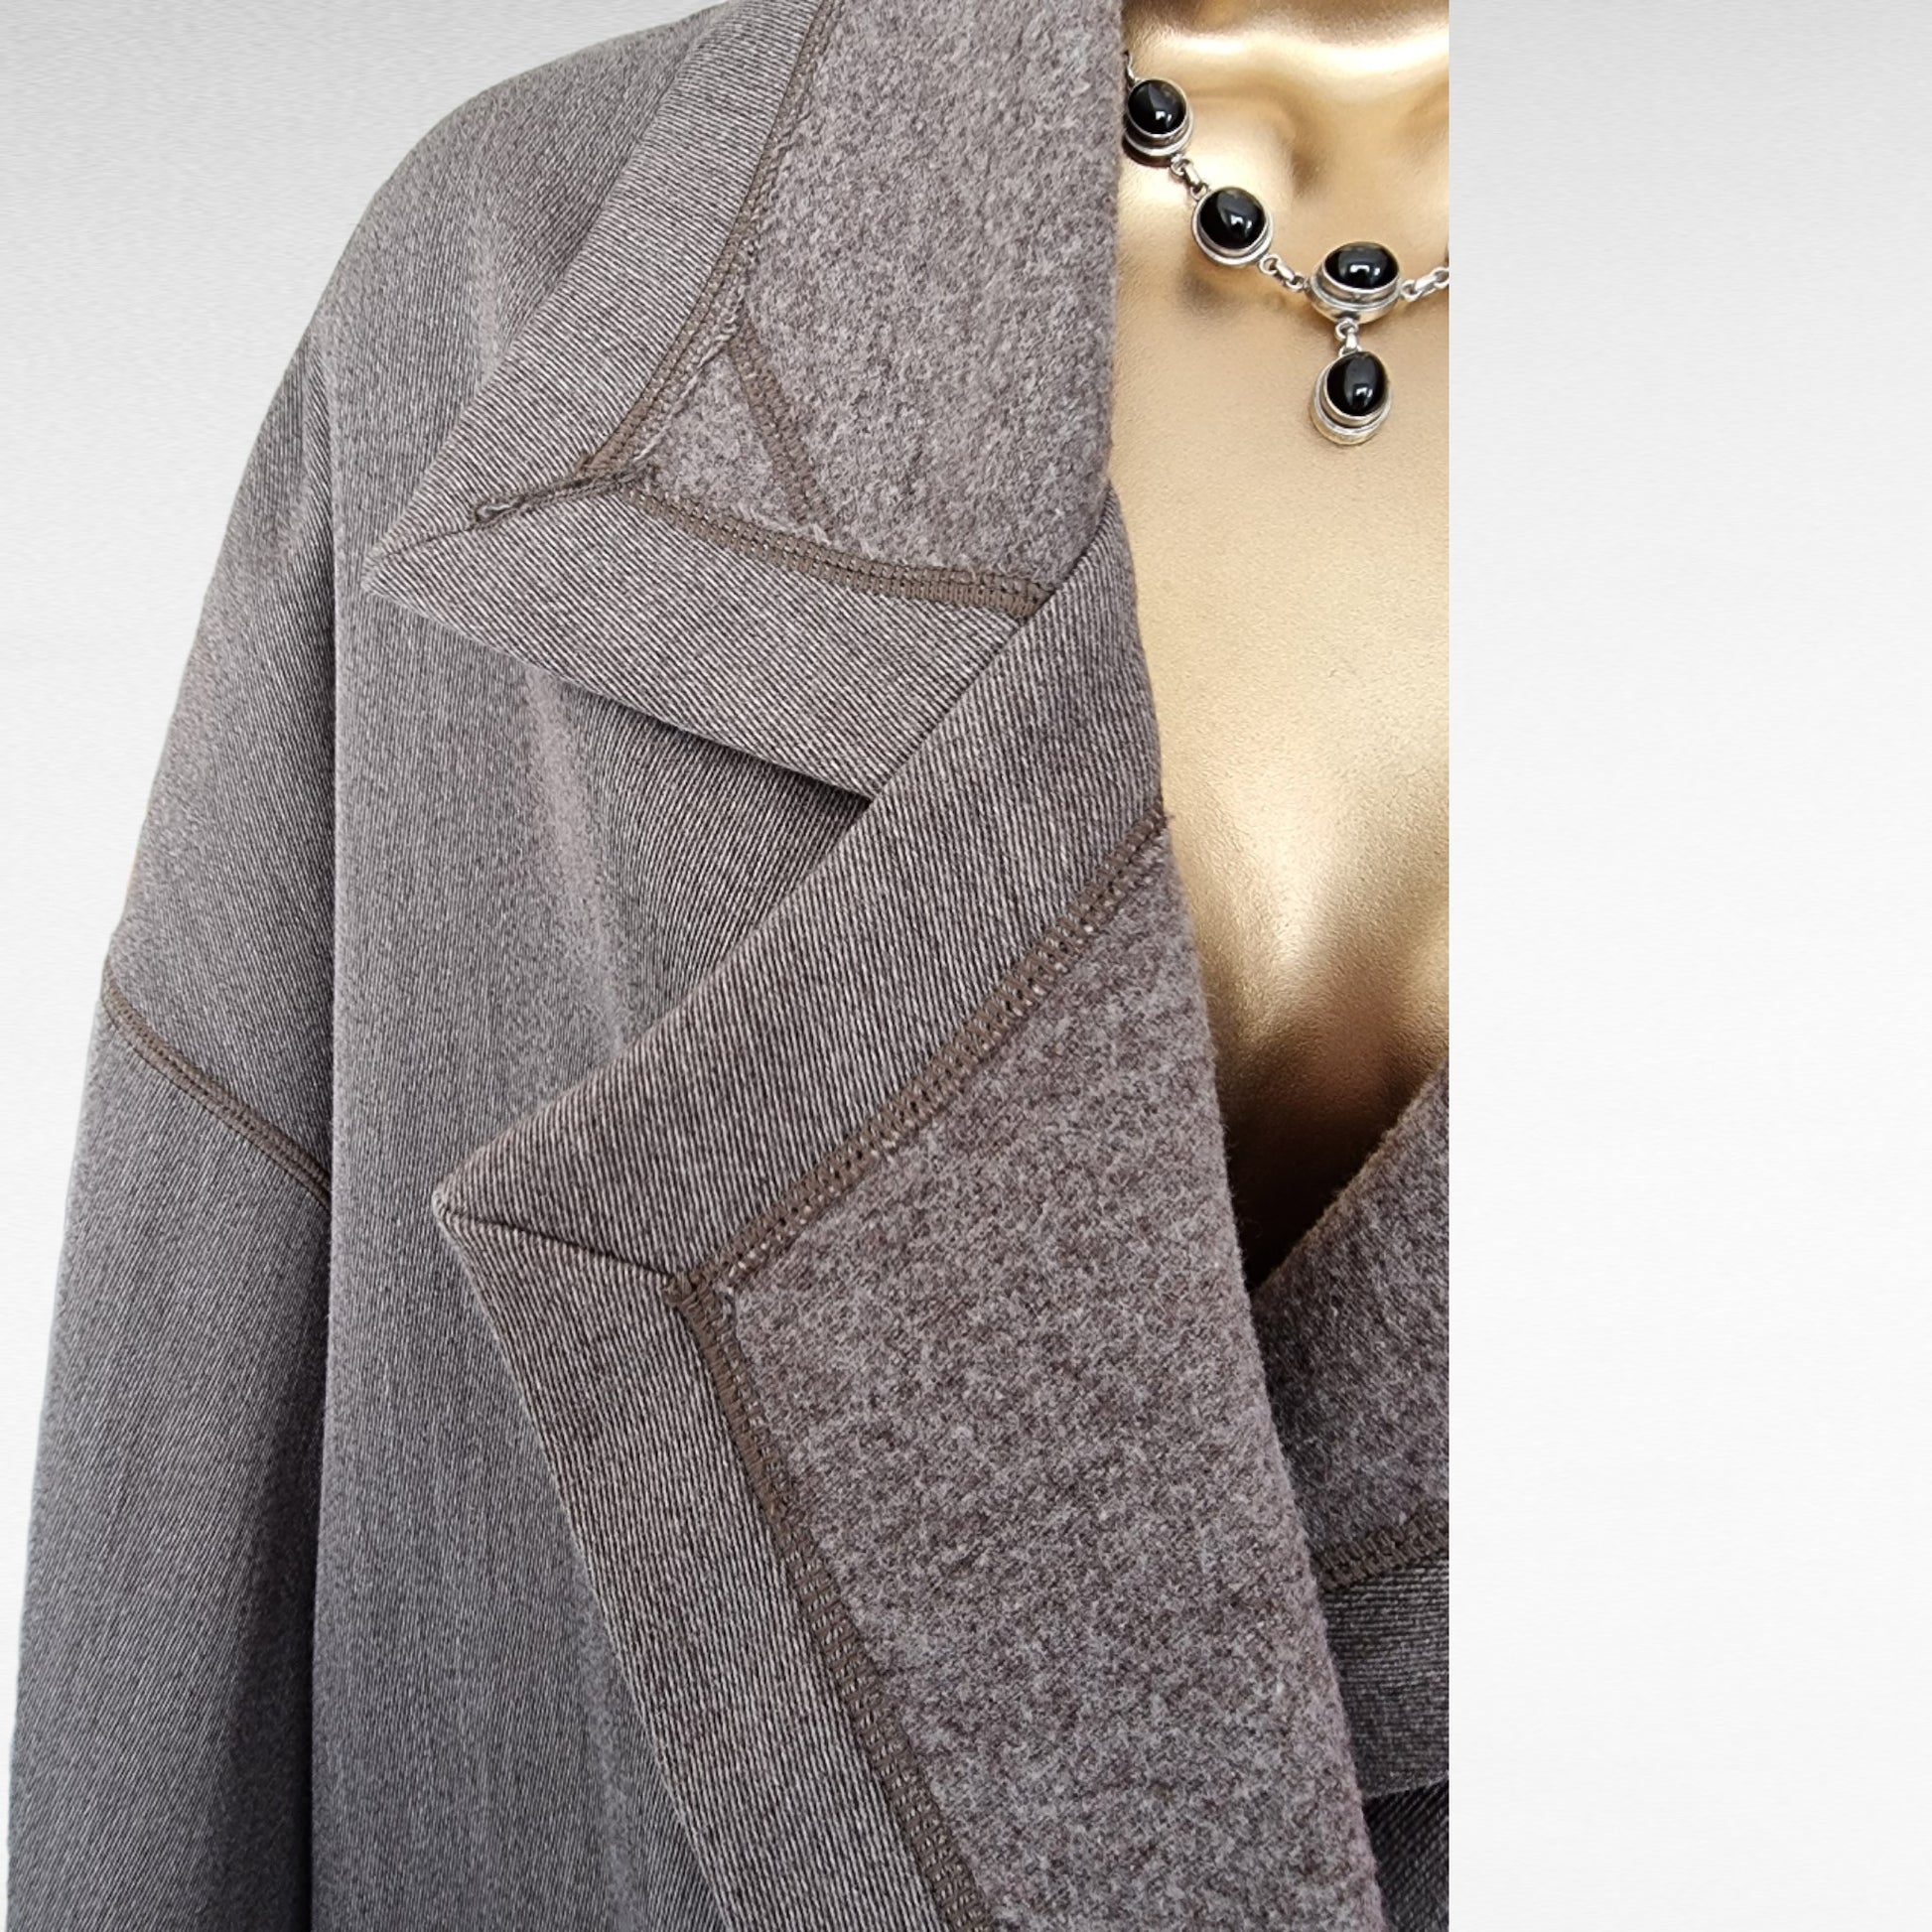 Nicole Farhi Taupe Vintage Long Wool Duster Coat UK 12 US 8 EU 40 Timeless Fashions